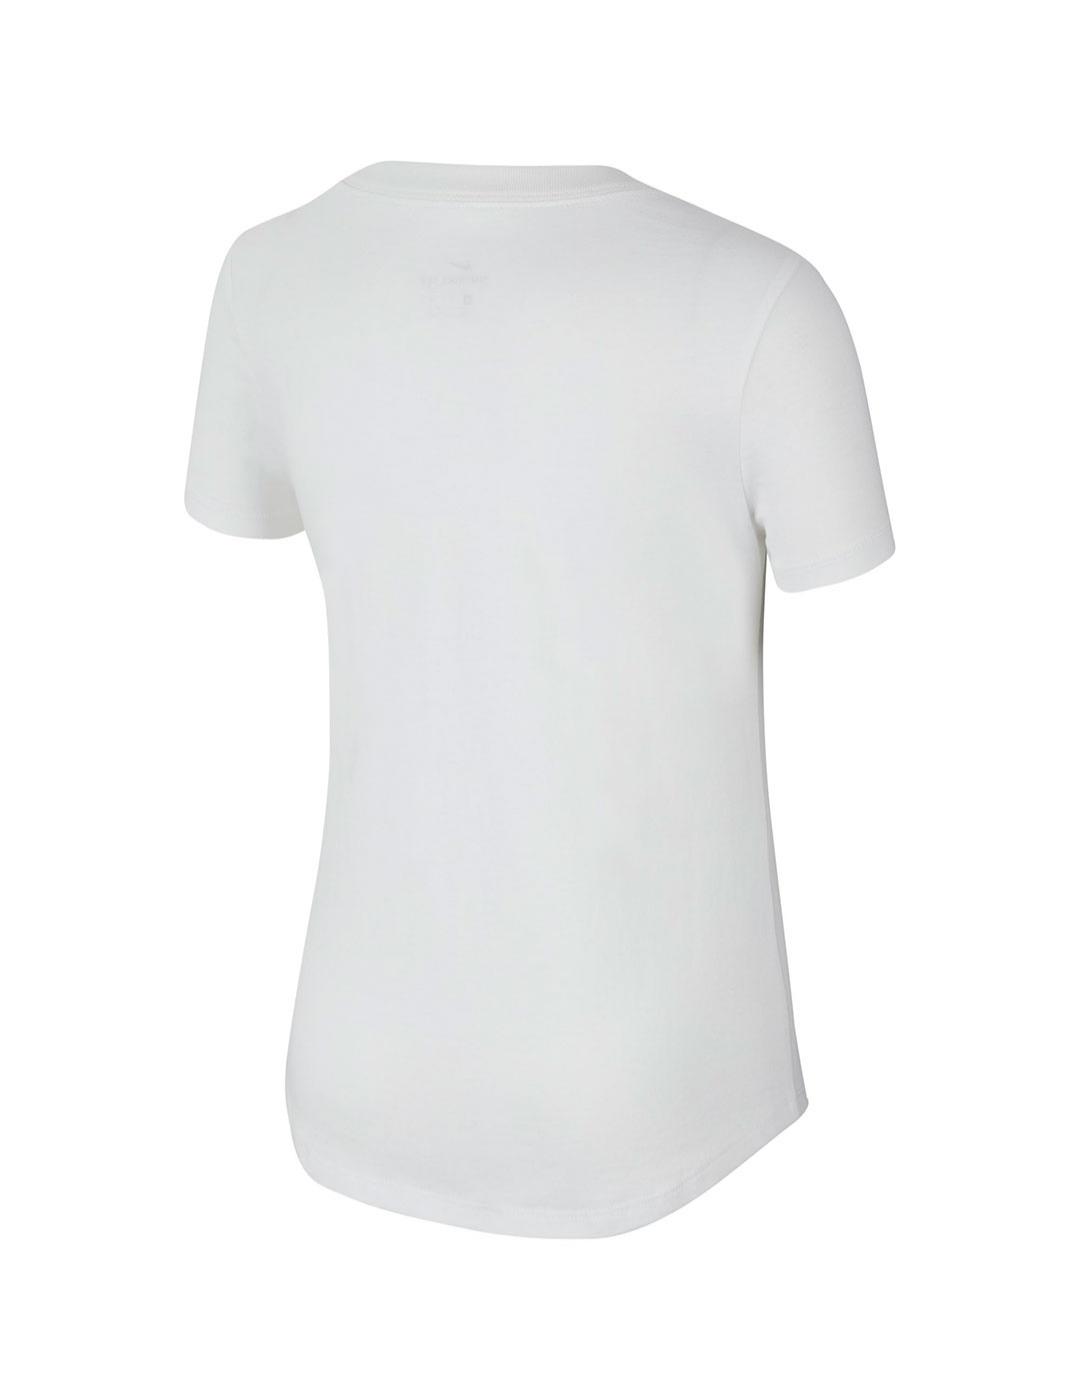 Camiseta Niña Nike Scoop Blanca